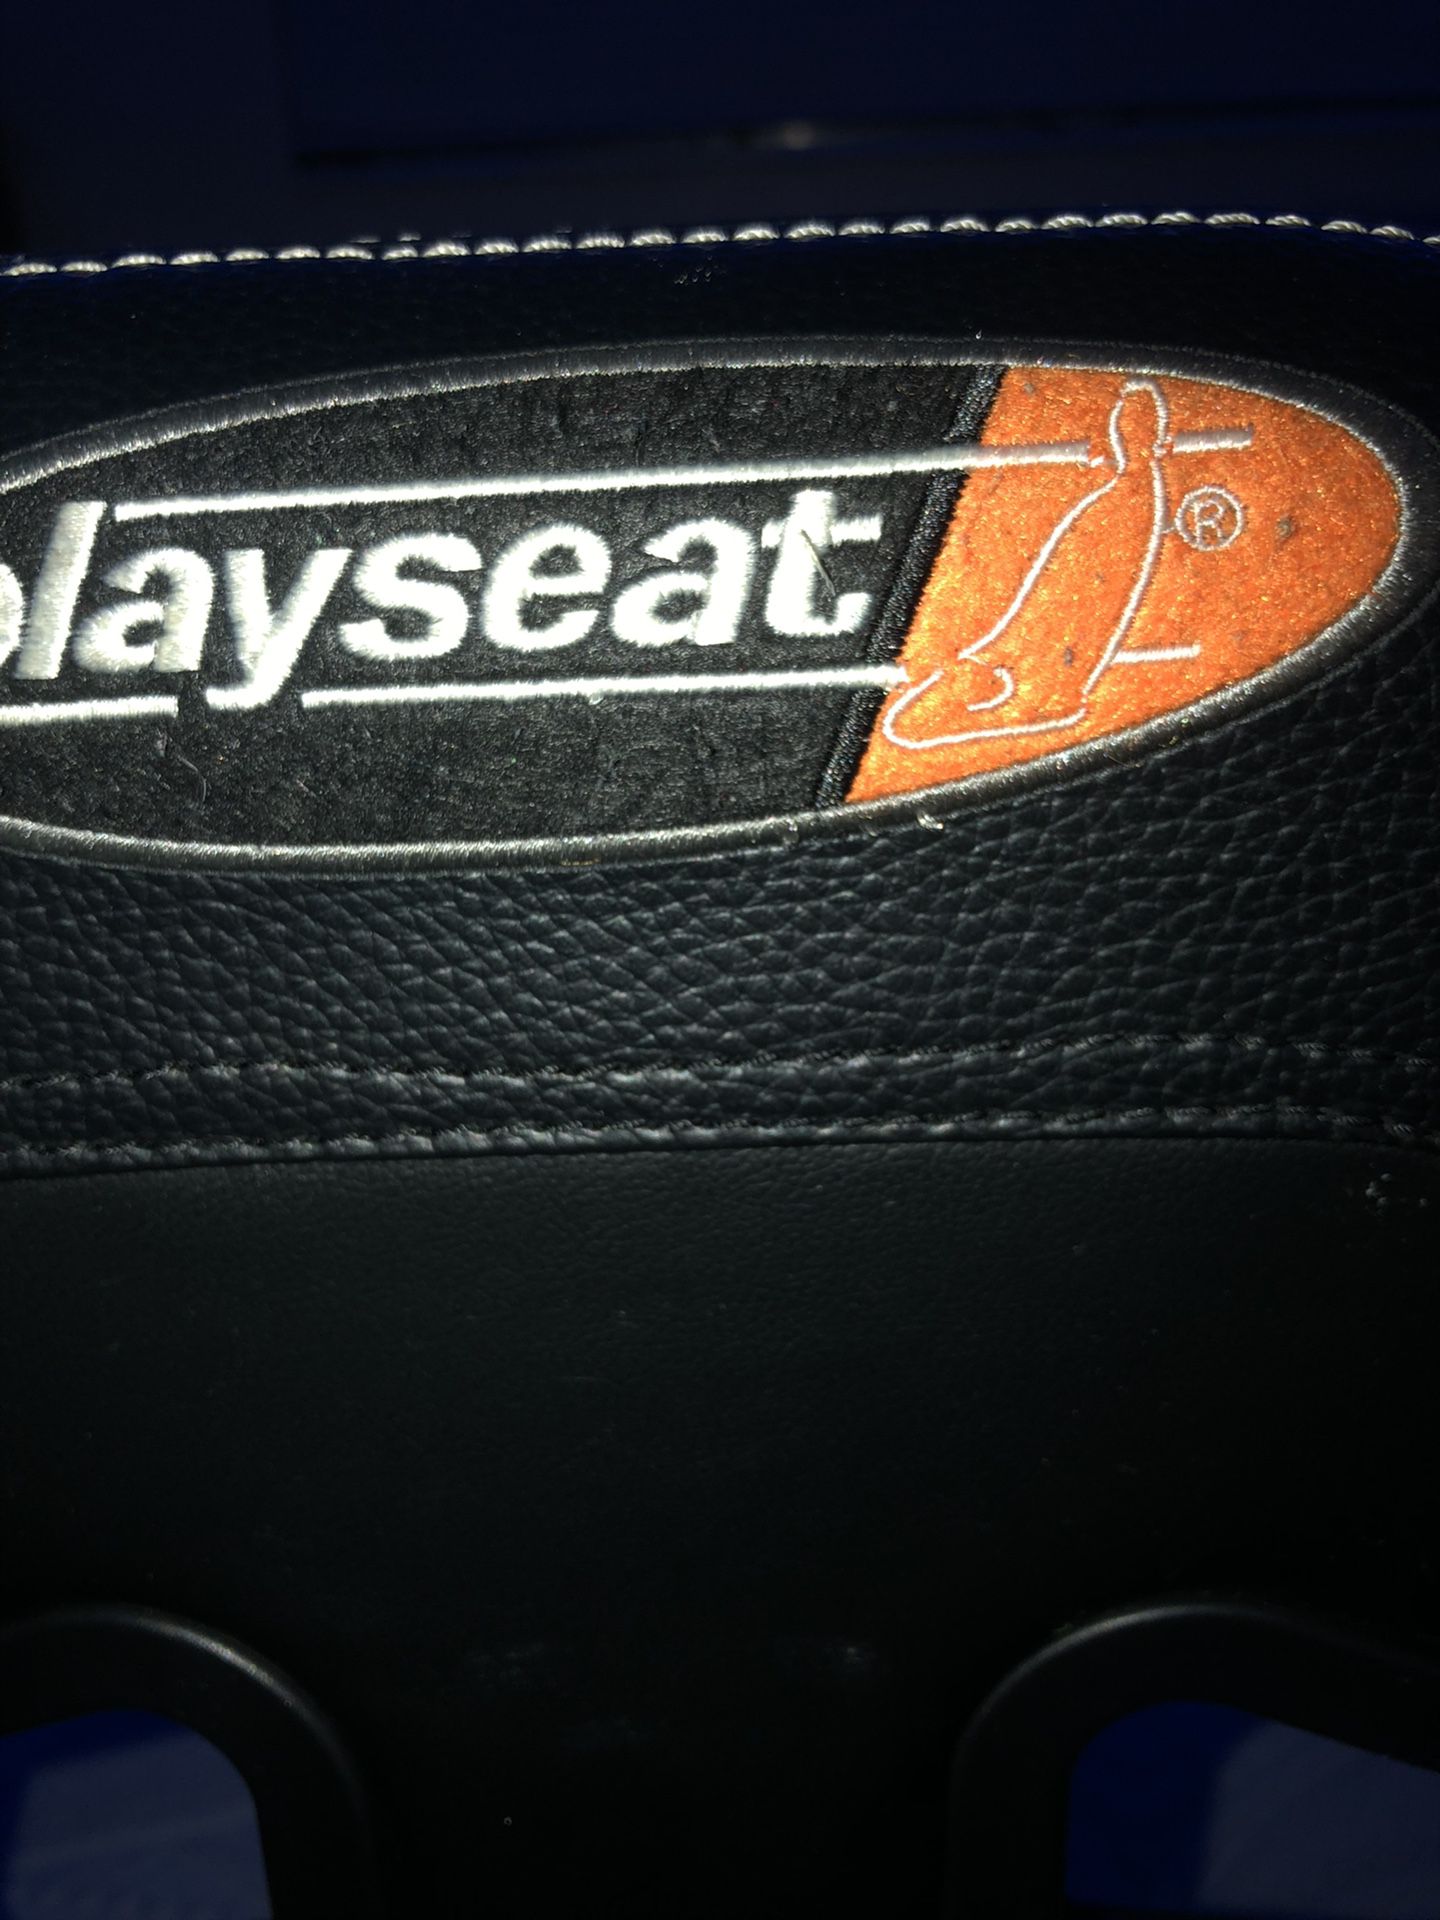 Playsest Xbox 458 Steering wheel